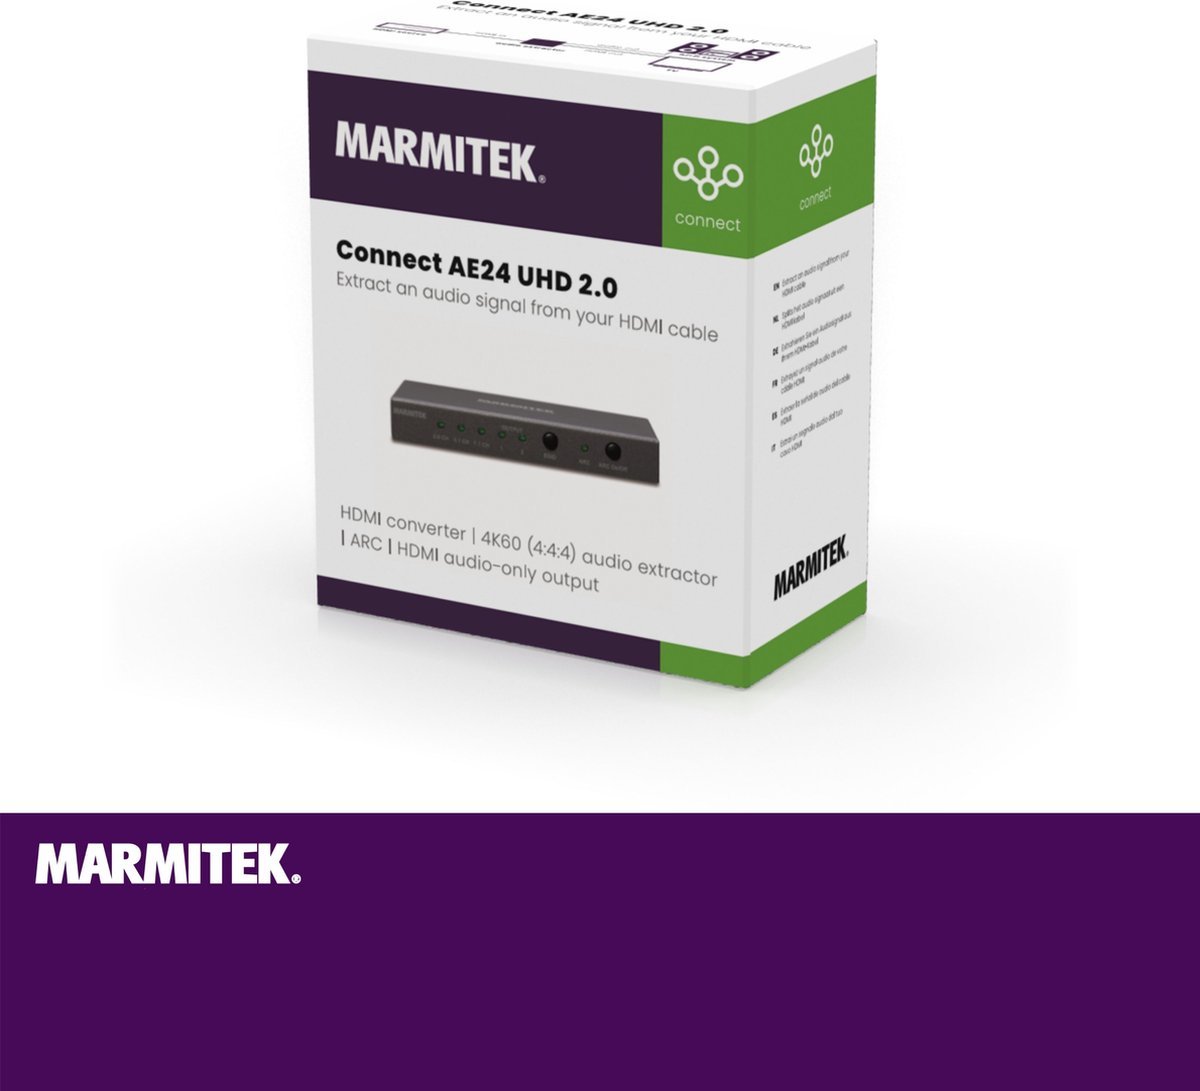 Marmitek Connect AE24 UHD 2.0 HDMI converter | 4K60 (4:4:4) audio extractor | ARC | HDMI audio